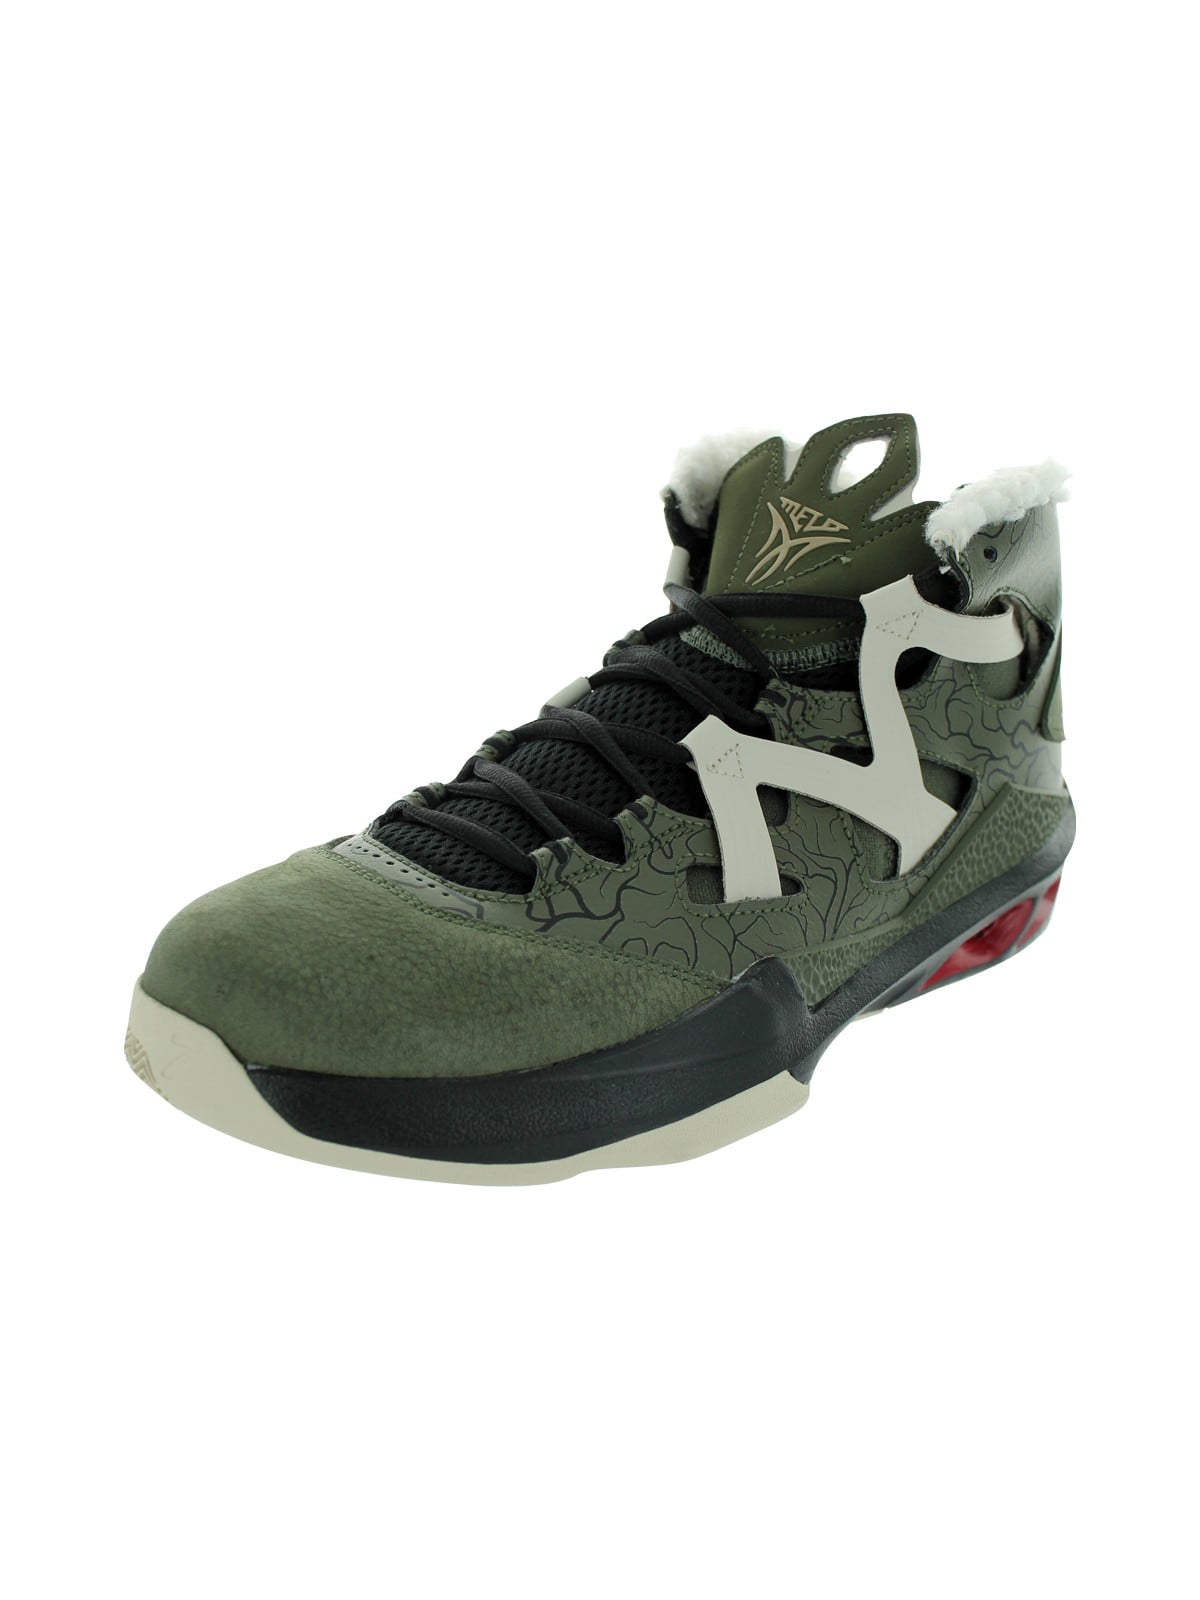 Nike Jordan Melo M9 Basketball Shoes Walmart.com